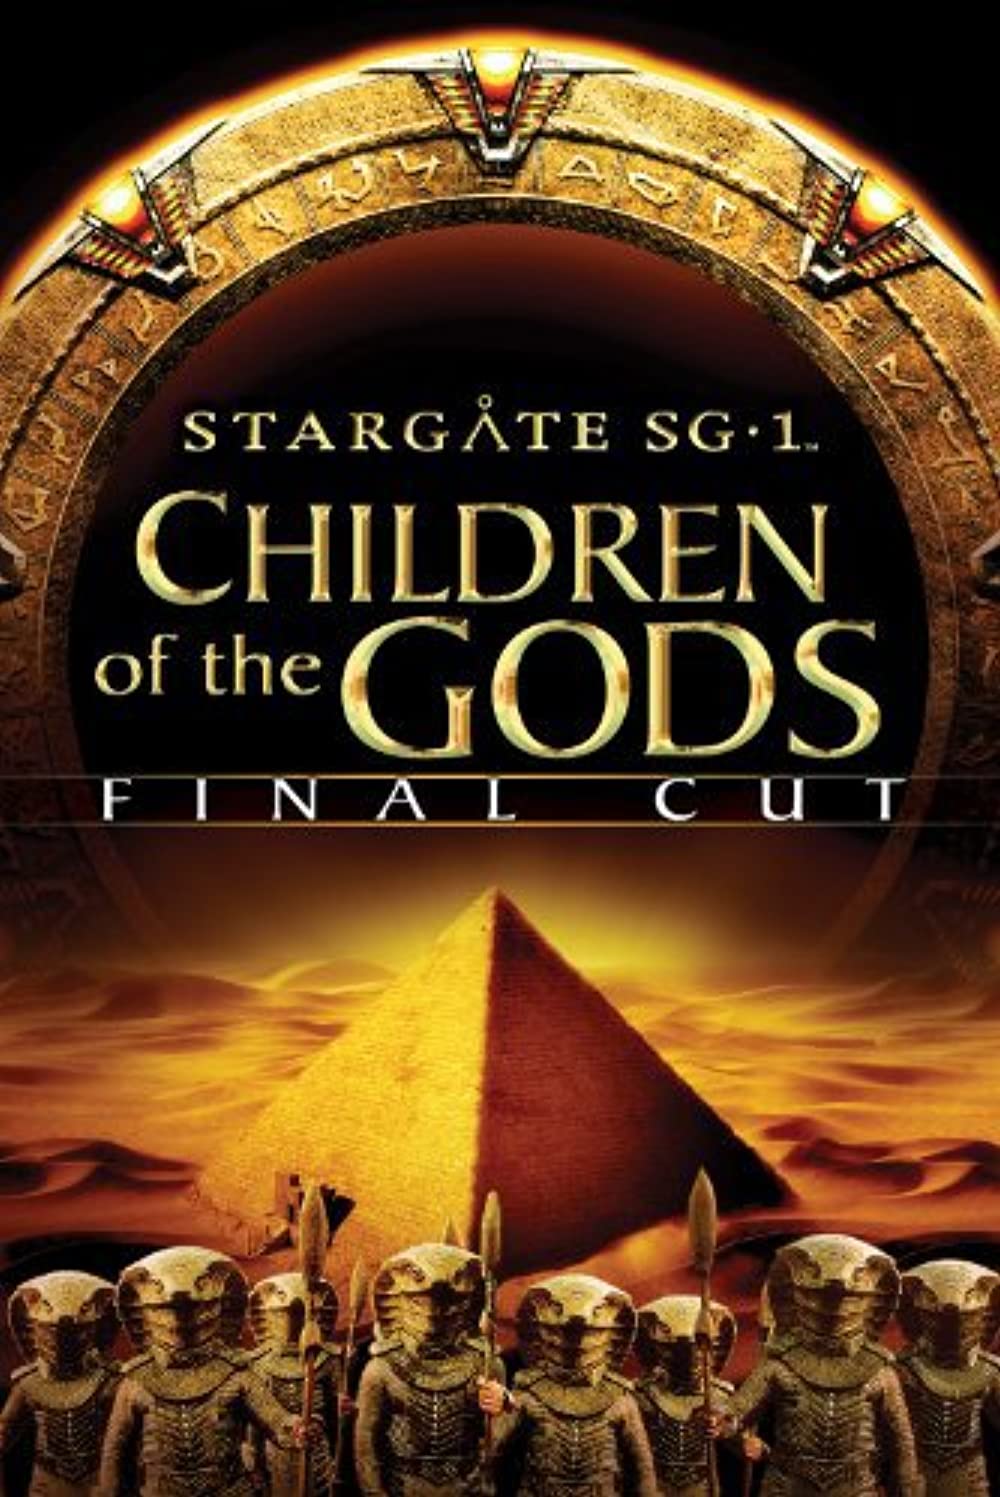 Download Stargate SG-1: Children of the Gods - Final Cut Movie | Stargate Sg-1: Children Of The Gods - Final Cut